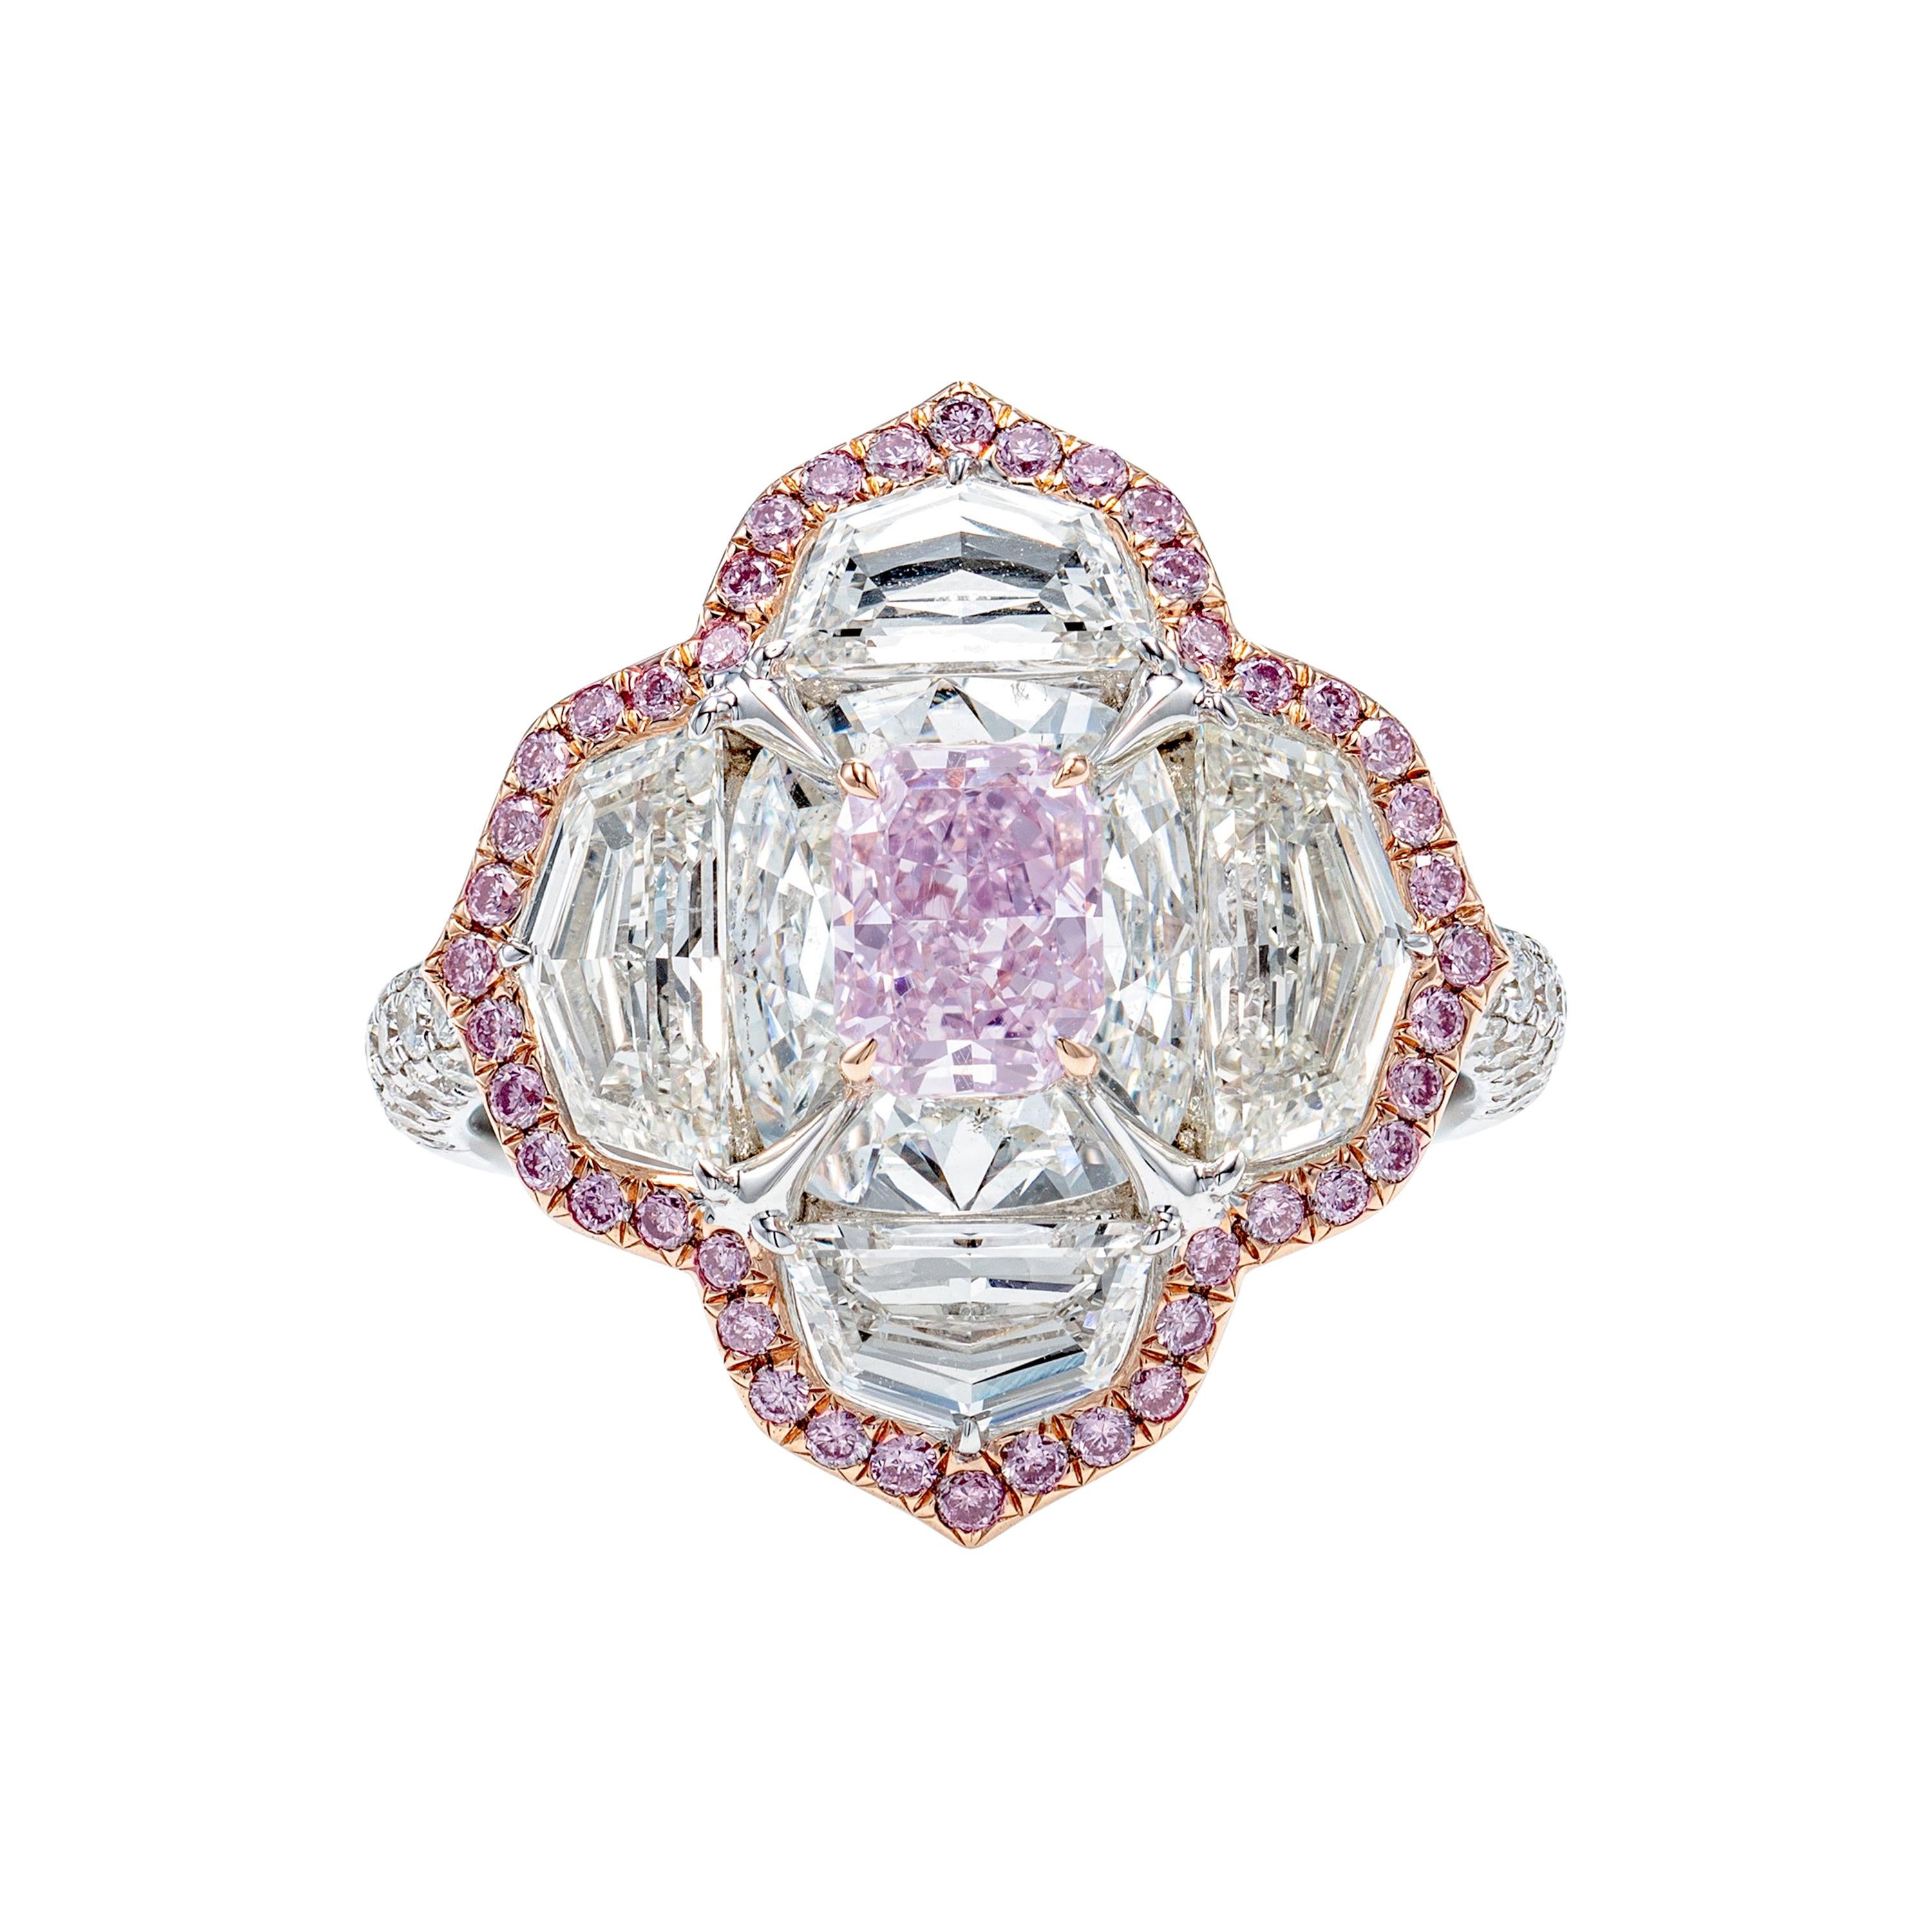 GIA Certified 4.97 Carat Fancy Pink Purple Clover Diamond Ring in 18K Gold